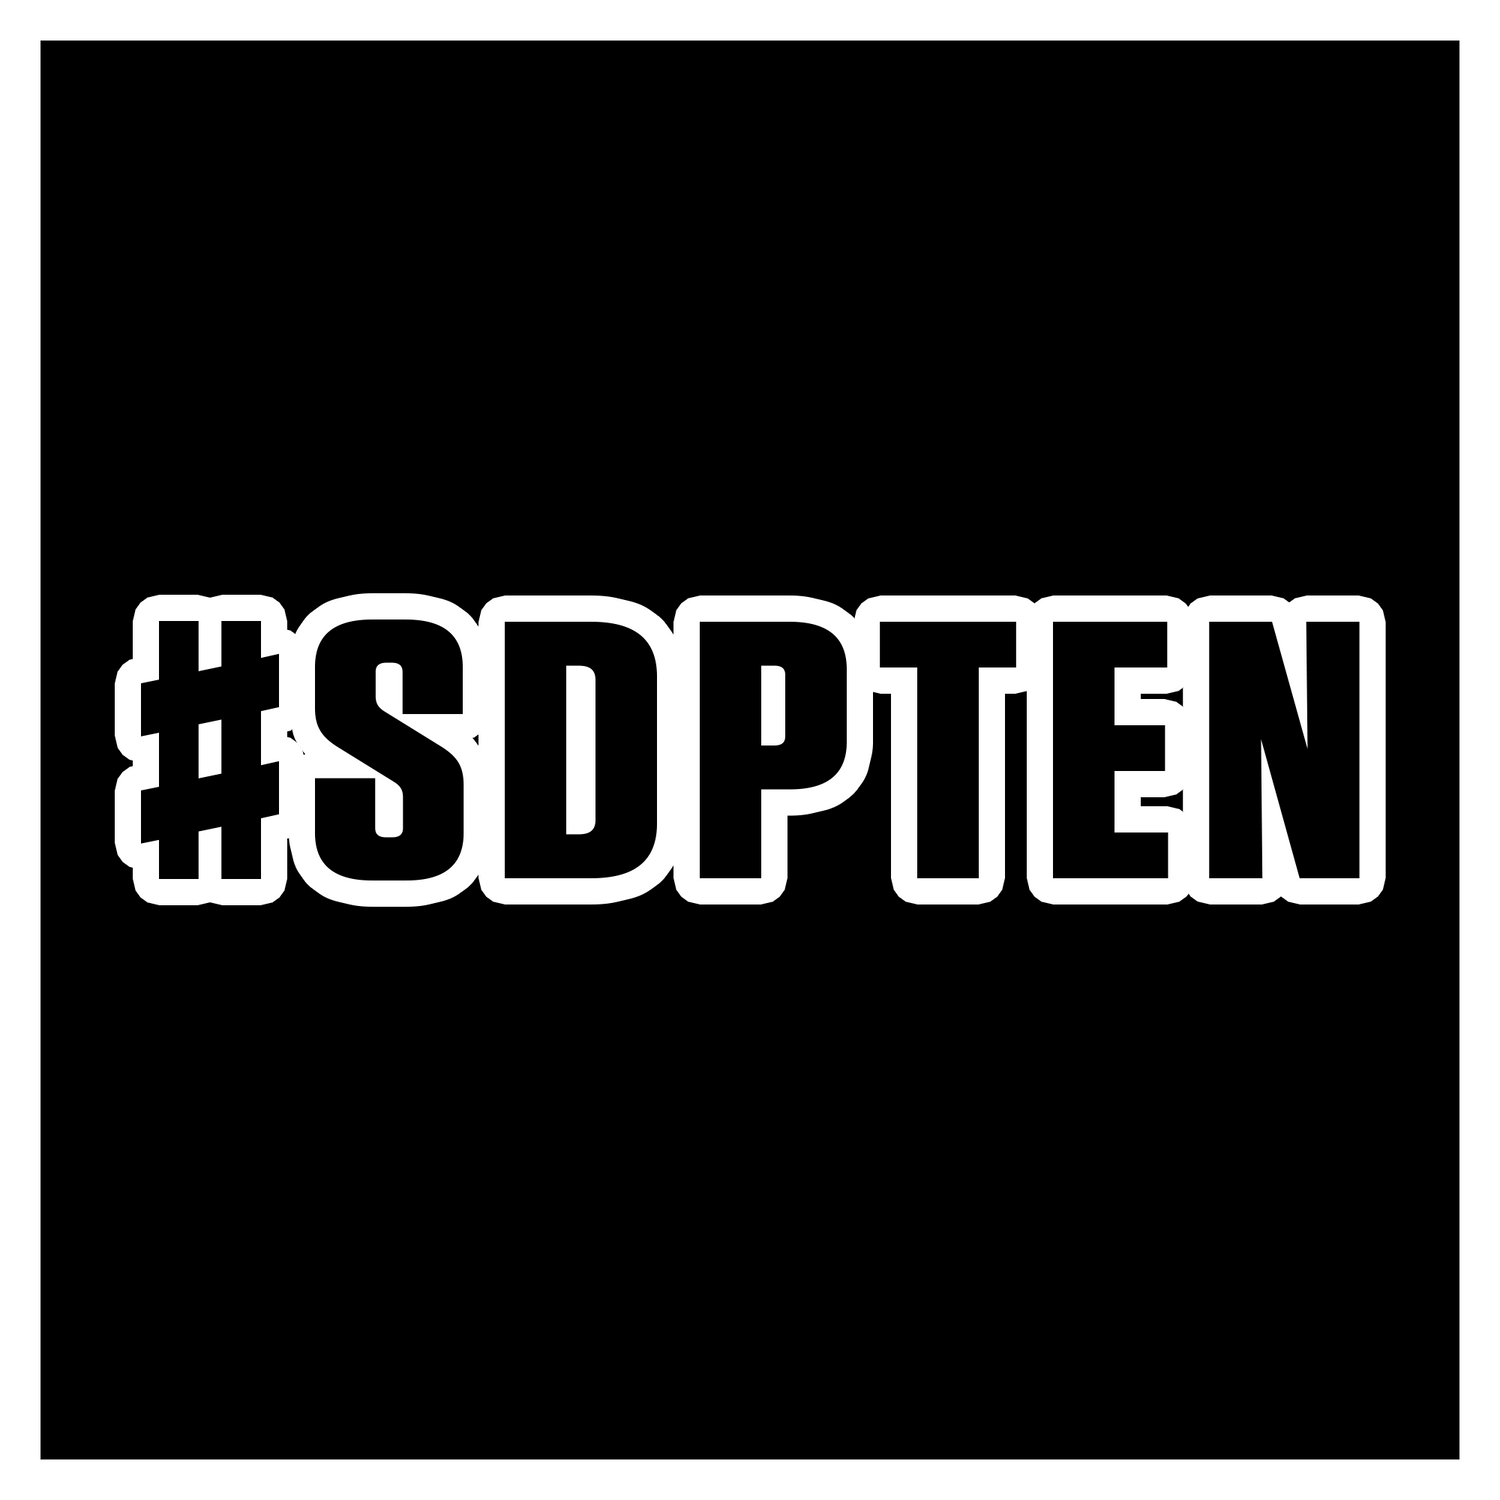 #SDPTEN